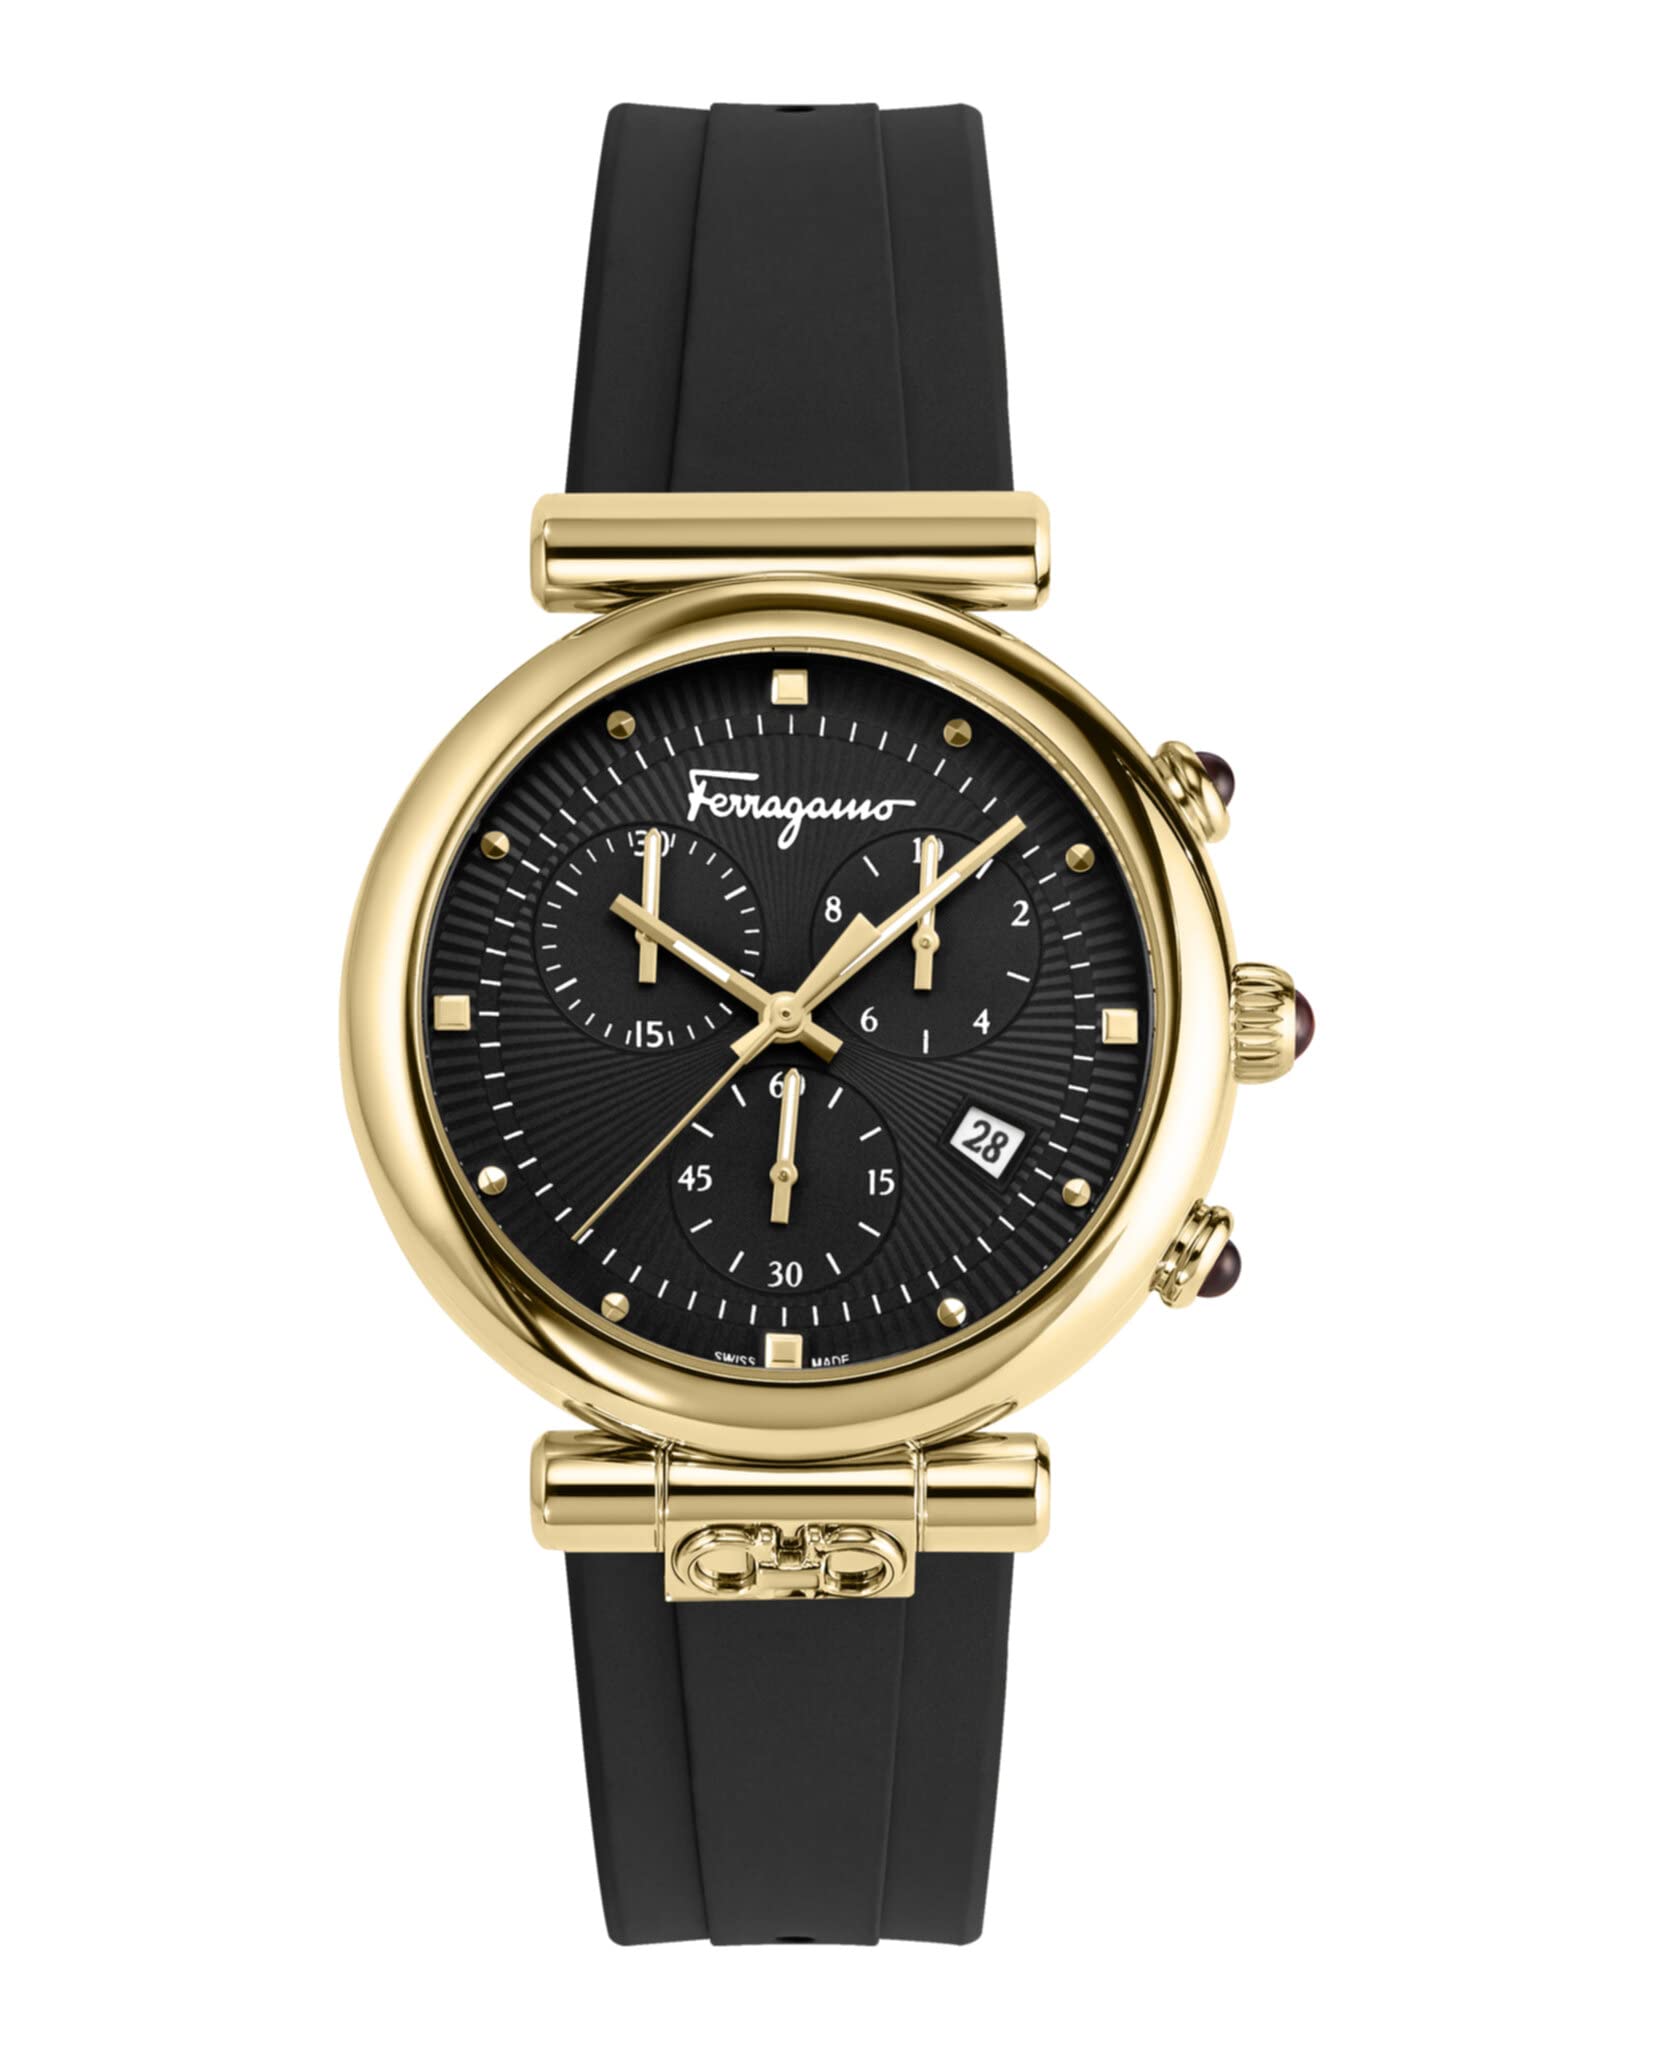 Salvatore Ferragamo Women's Stainless Steel Chronograph Quartz Watch with Silicone Strap, Black, 20 (Model: SFYB00221)